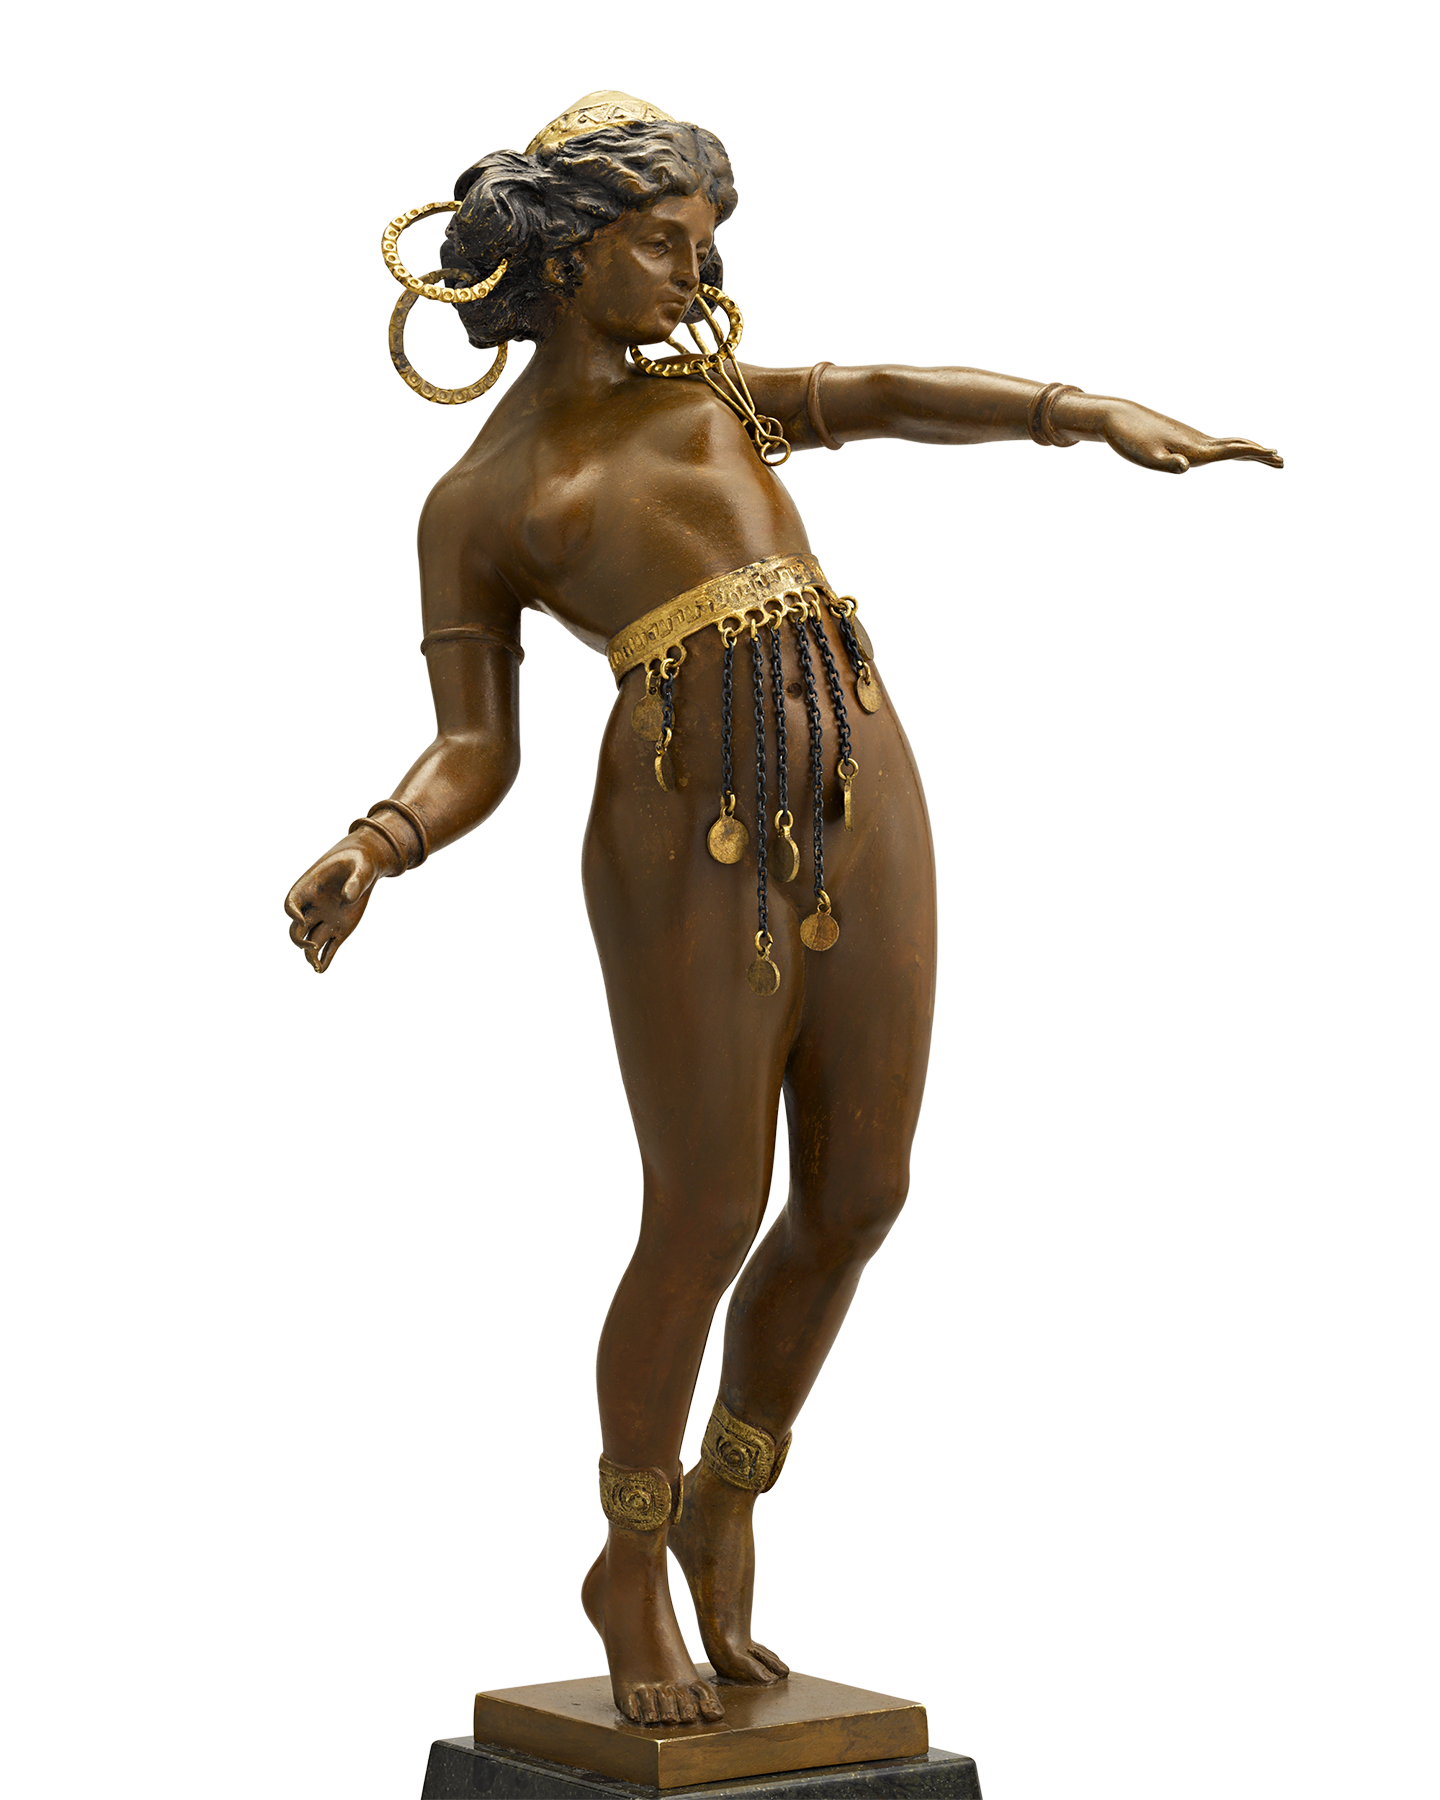 Nubian Dancer by Carl Kauba